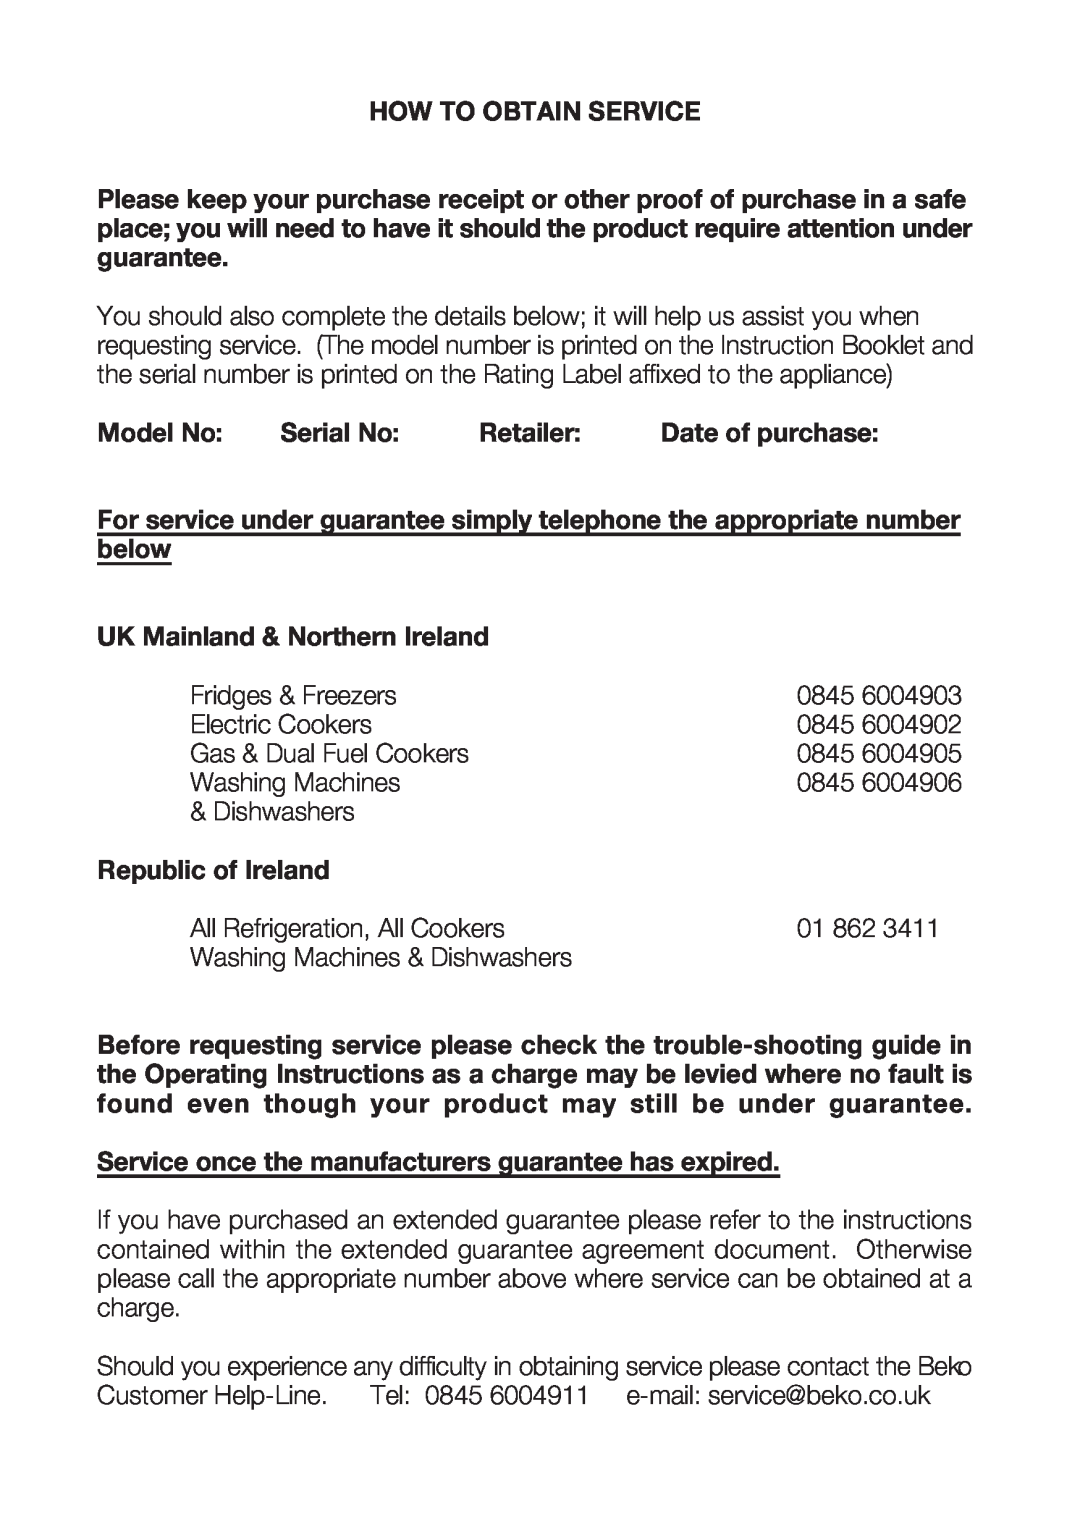 Beko CXFD 6113 S manual How To Obtain Service, Model No Serial No Retailer Date of purchase, below, Republic of Ireland 